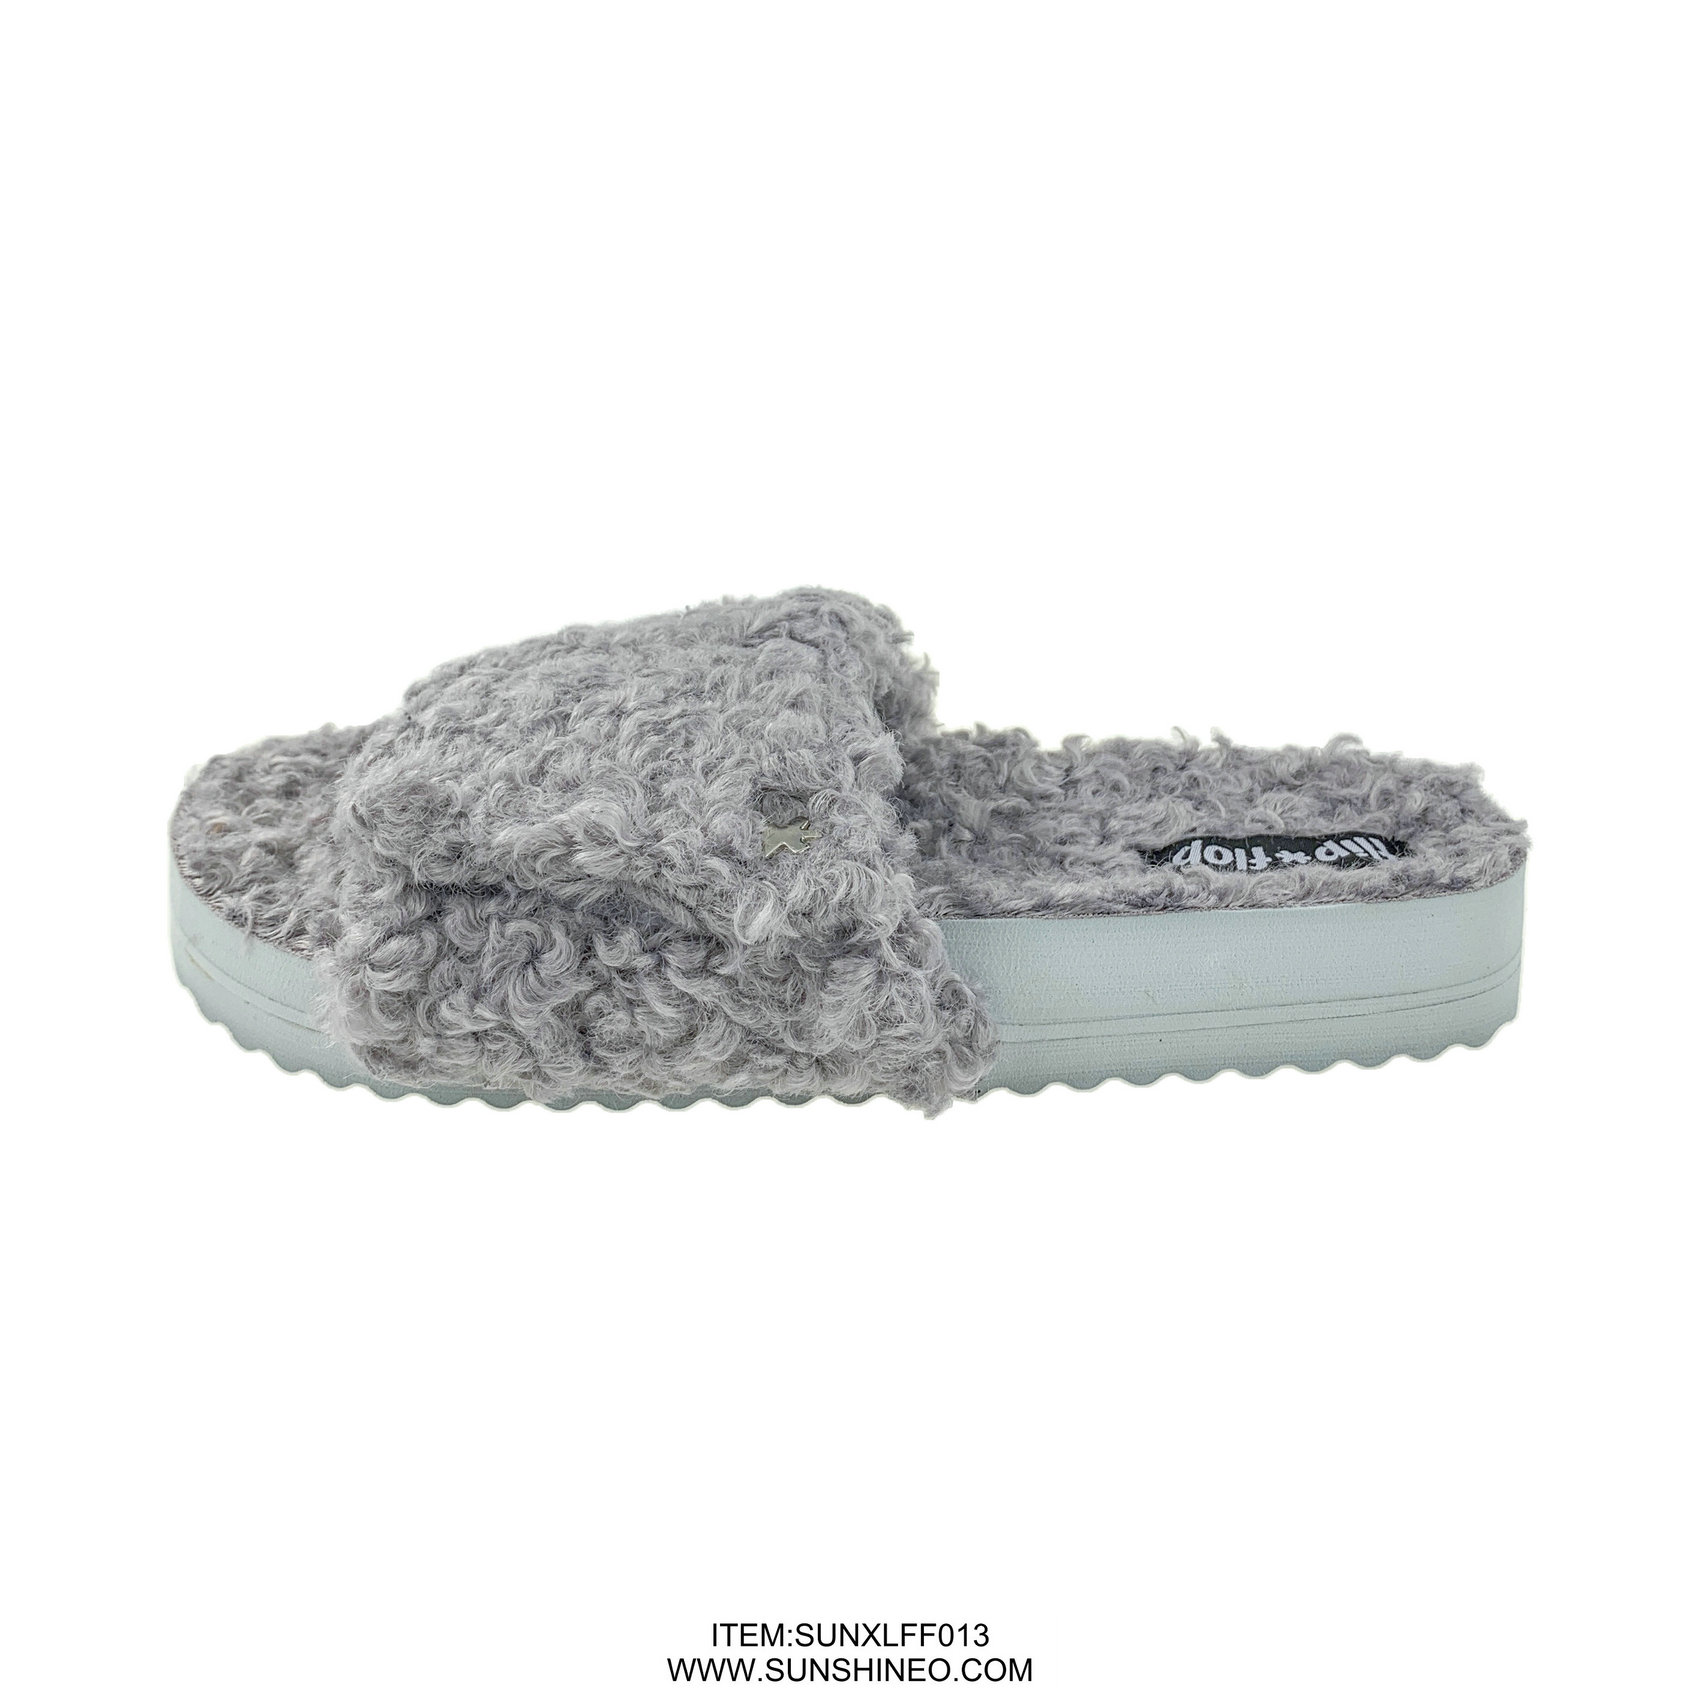 SUNXLFF013 fur flip flop sandals winter slippers